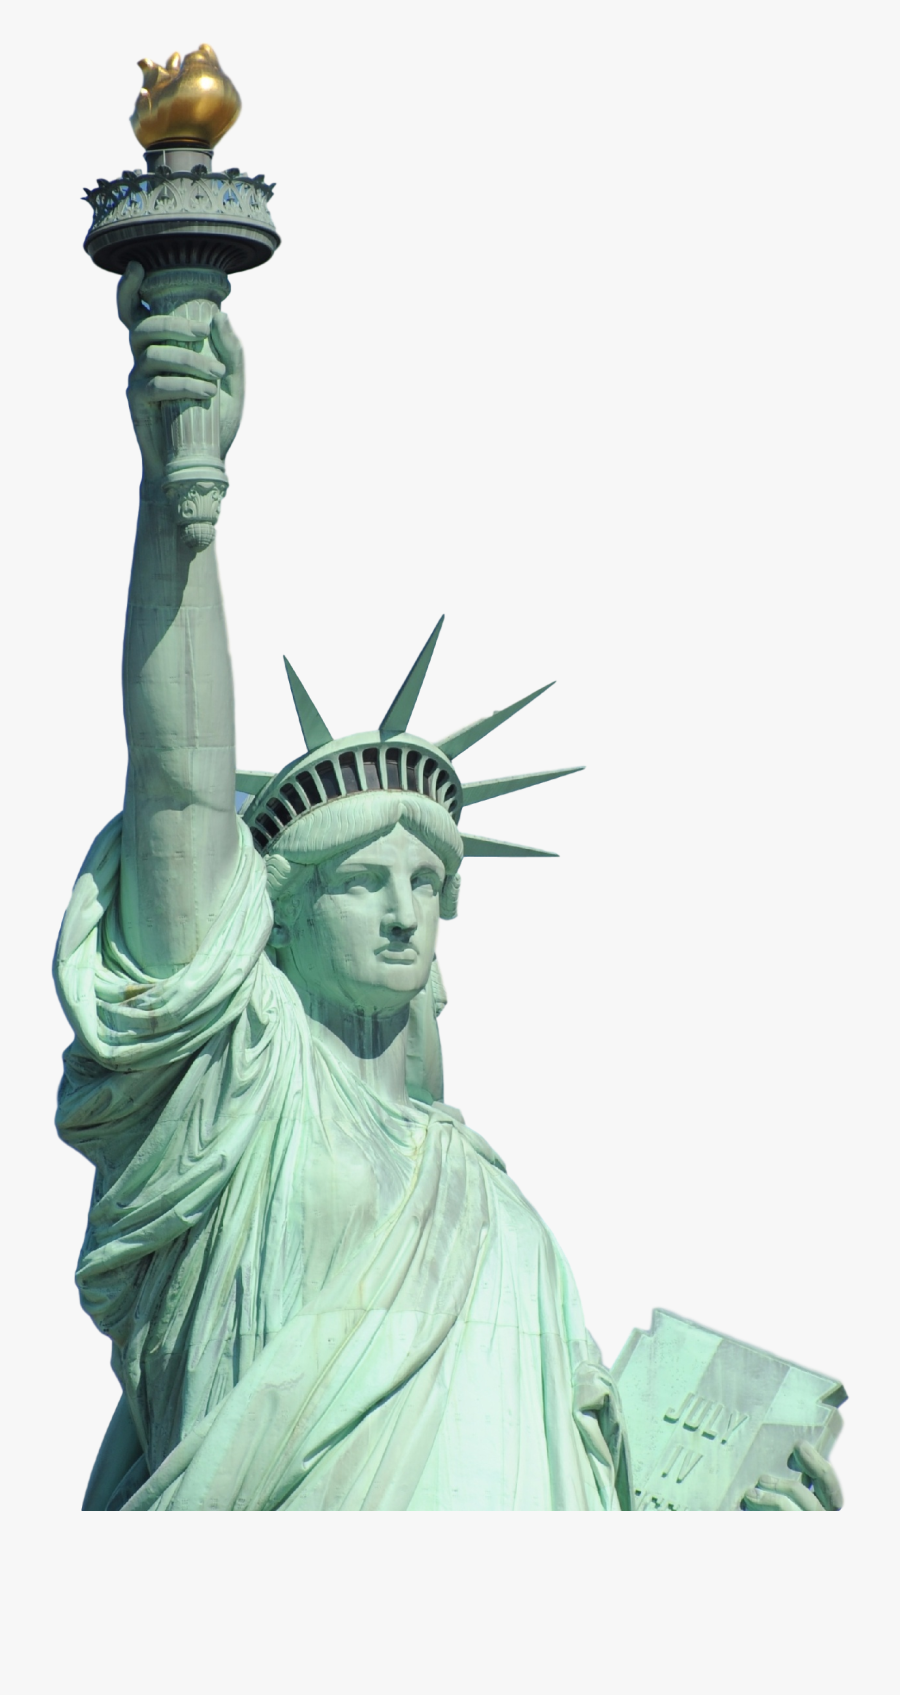 Statue Of Liberty Png Image - Statue Of Liberty Png Transparent, Transparent Clipart